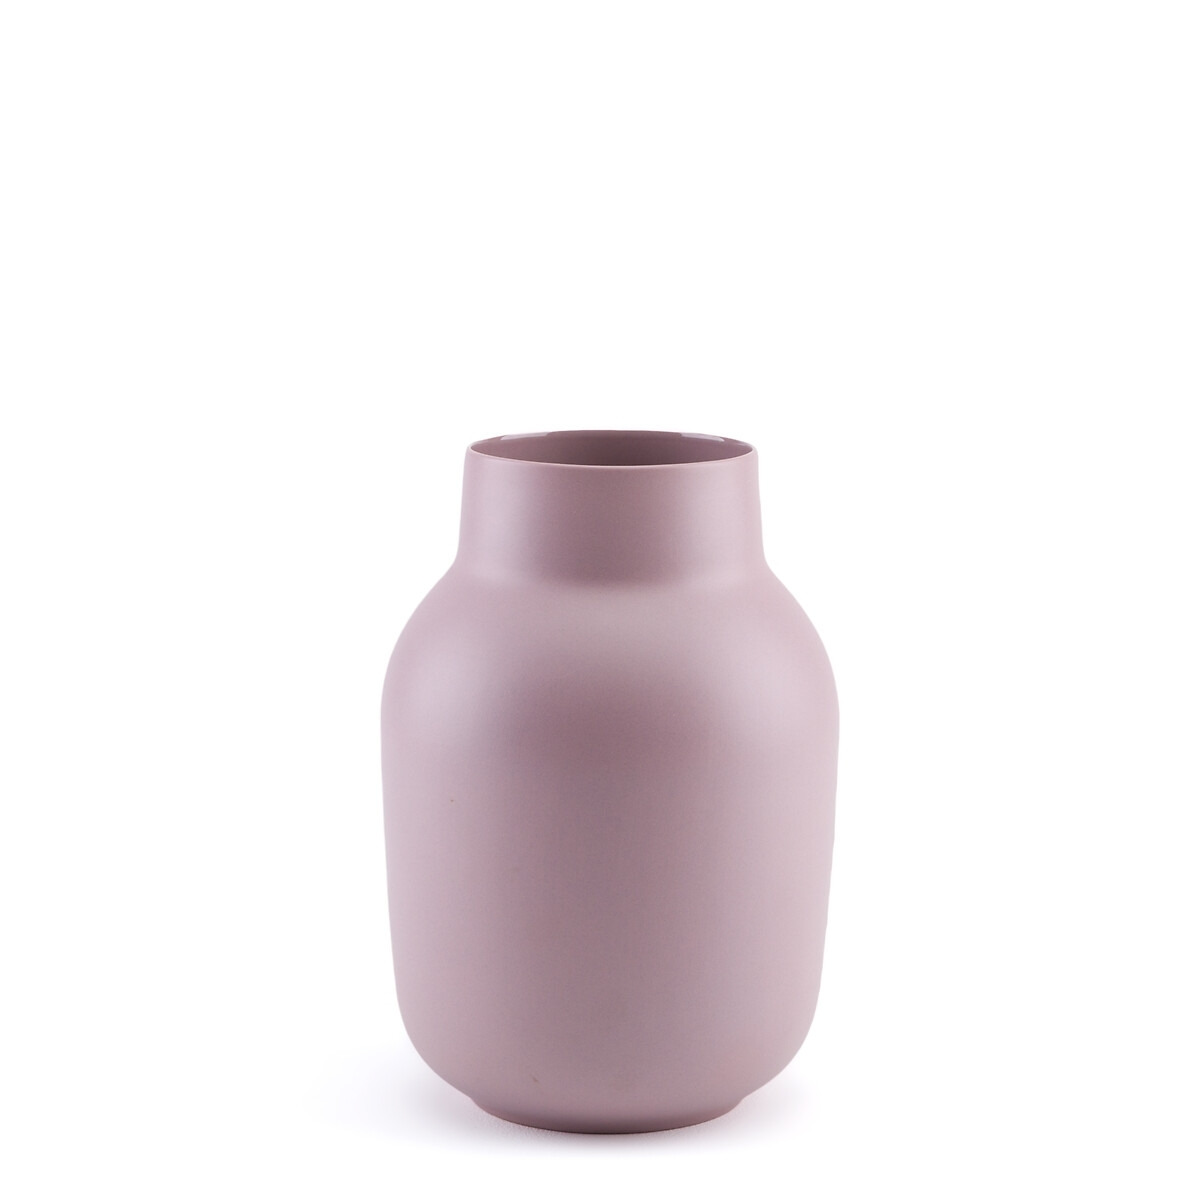 Sira 29cm High Matte Ceramic Vase - image 1